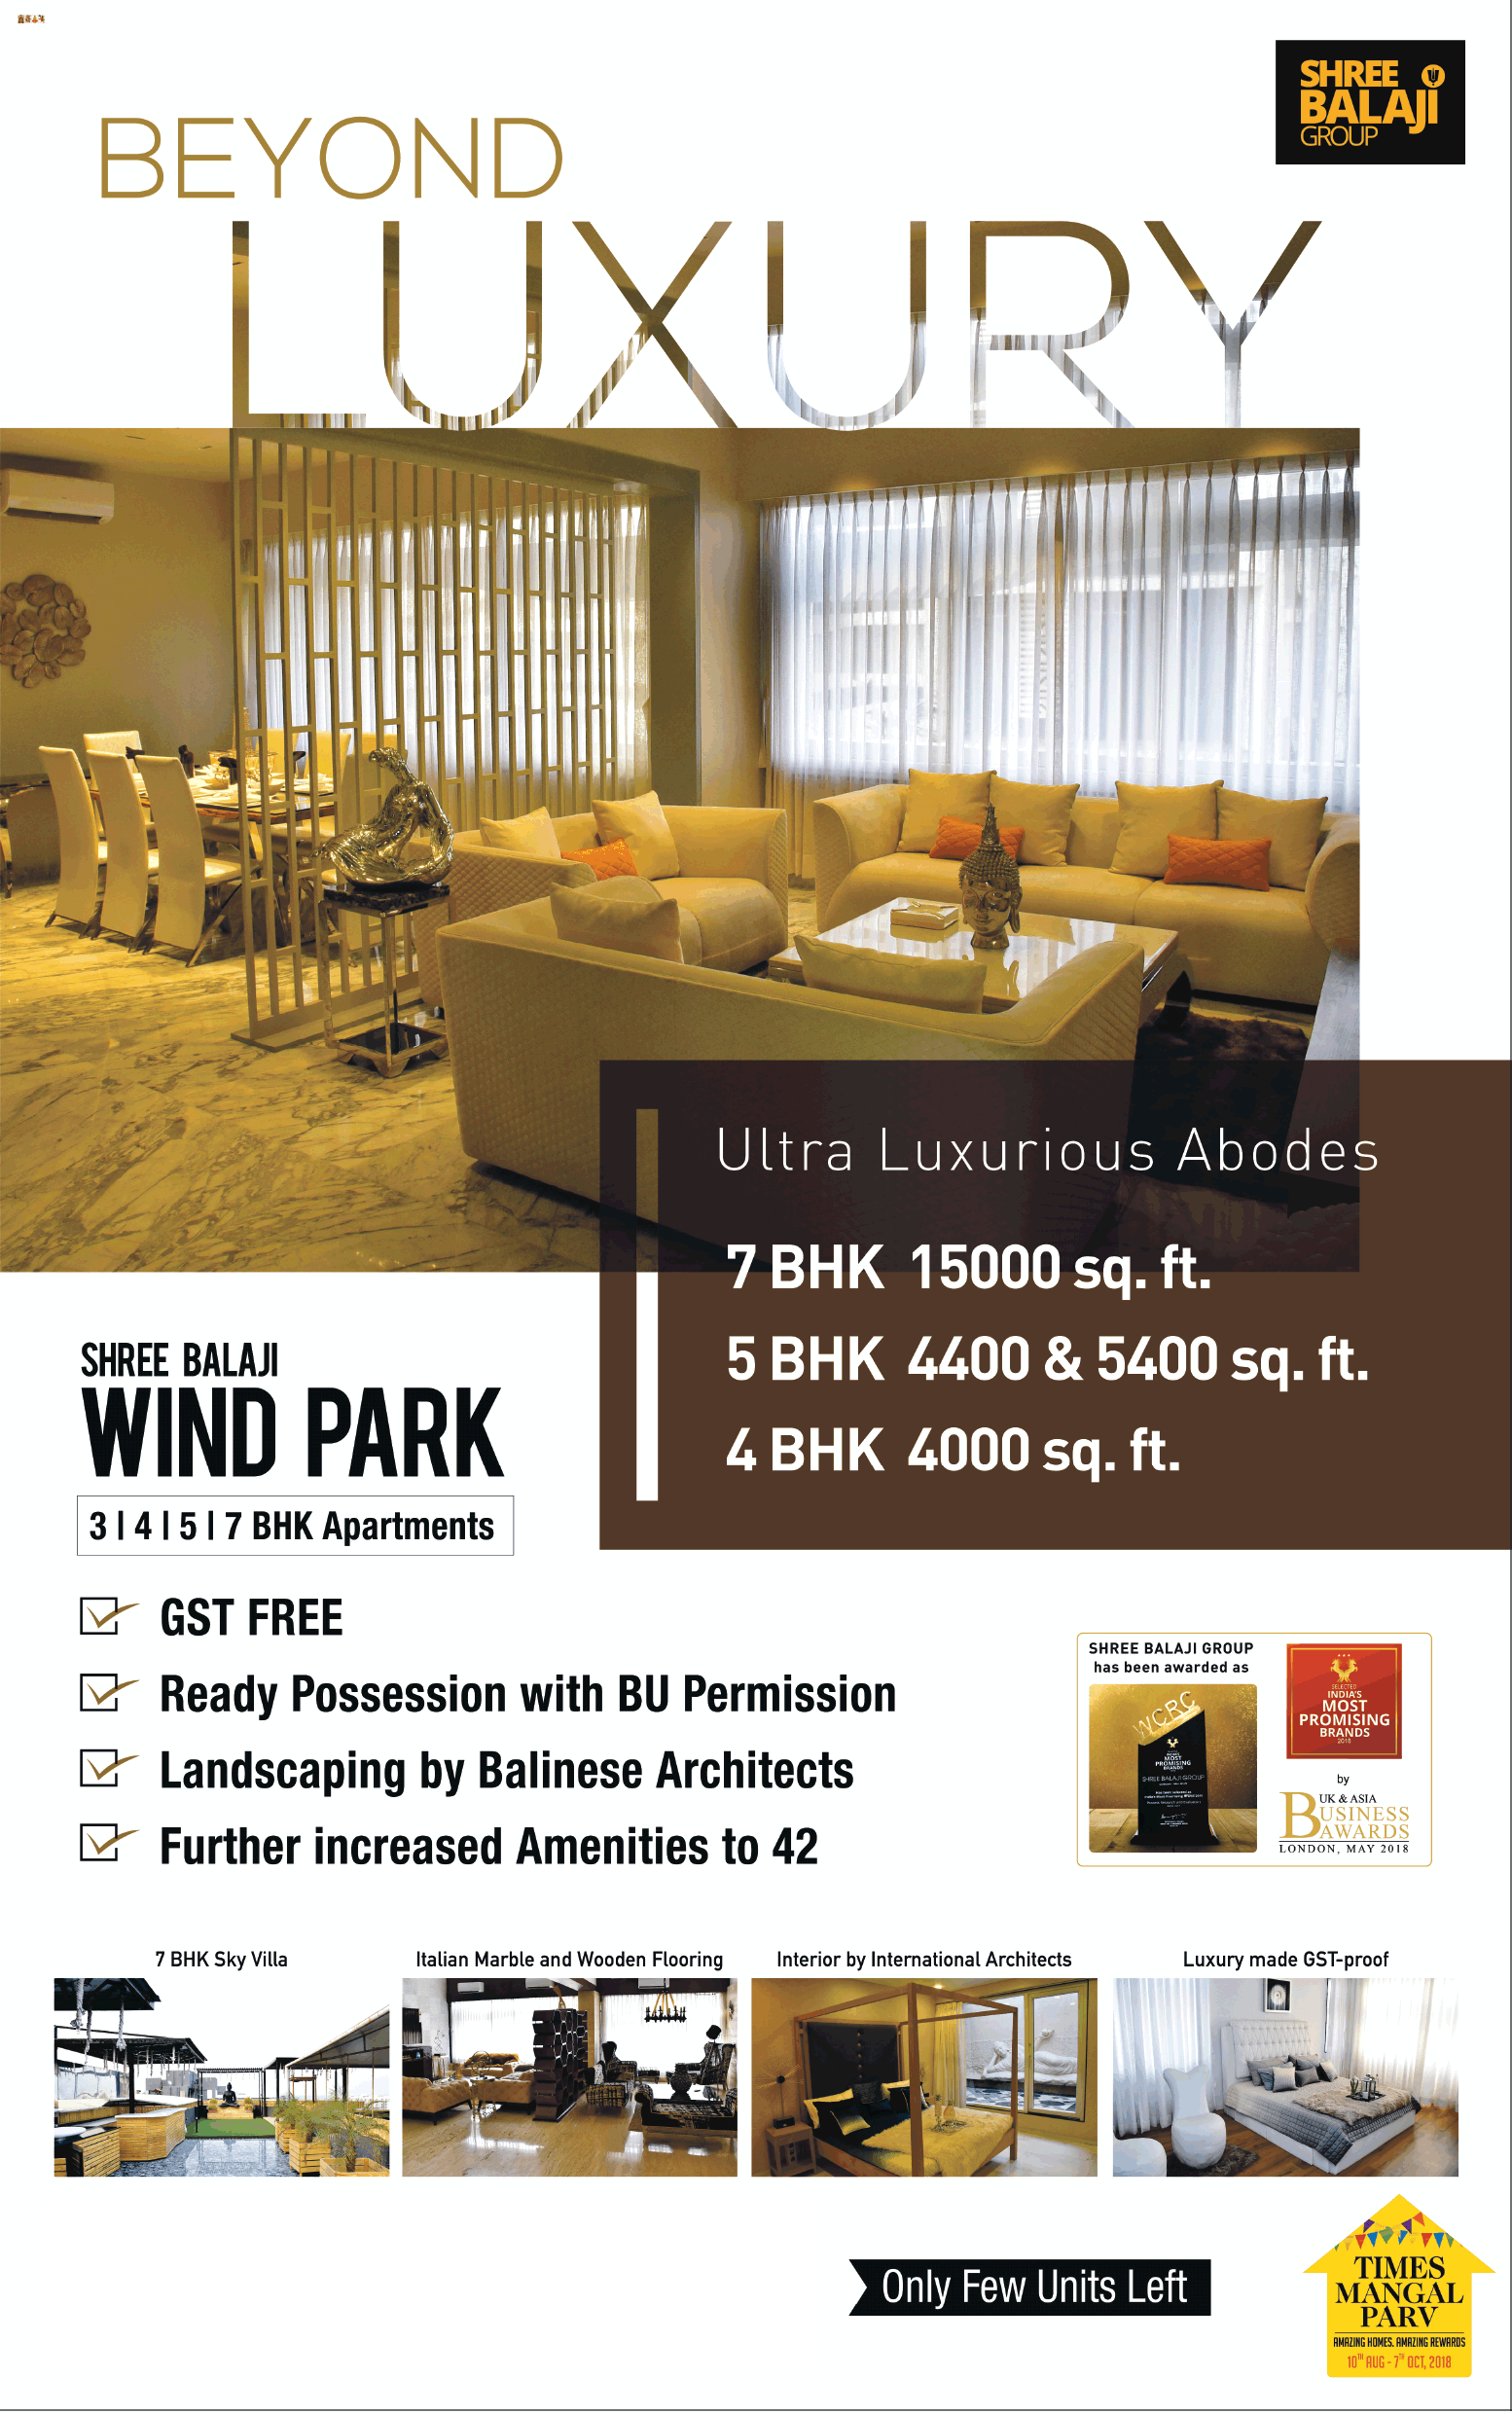 Book 3, 4, 5 & 7 bhk apartments at Shree Balaji Wind Park in Ahmedabad